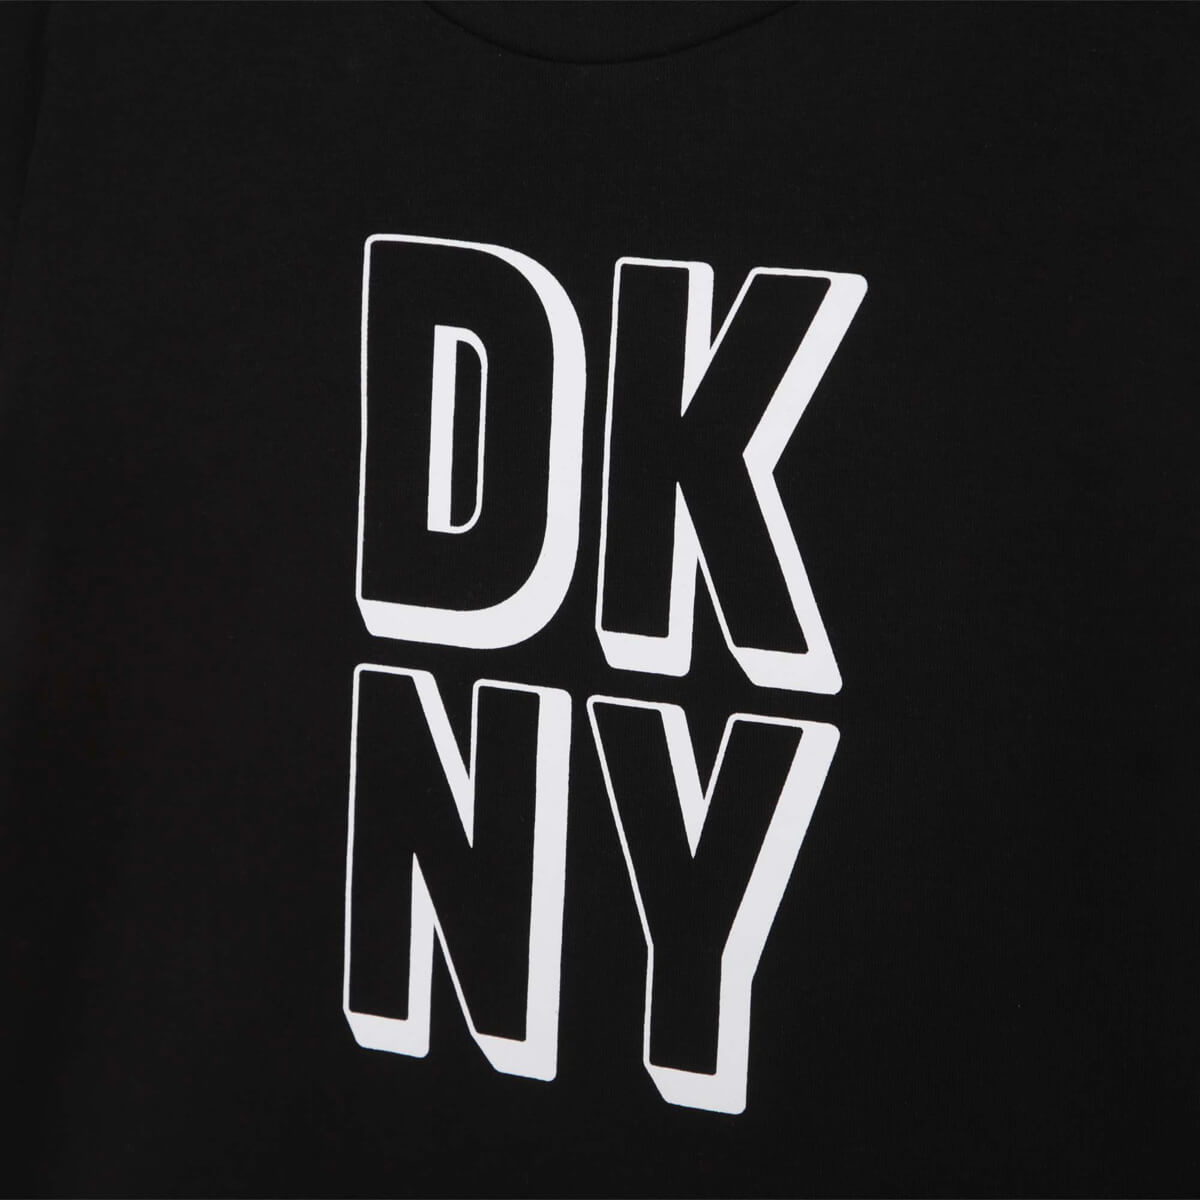 DKNY Kids, Girls, Short Sleeves T-Shirt, Black